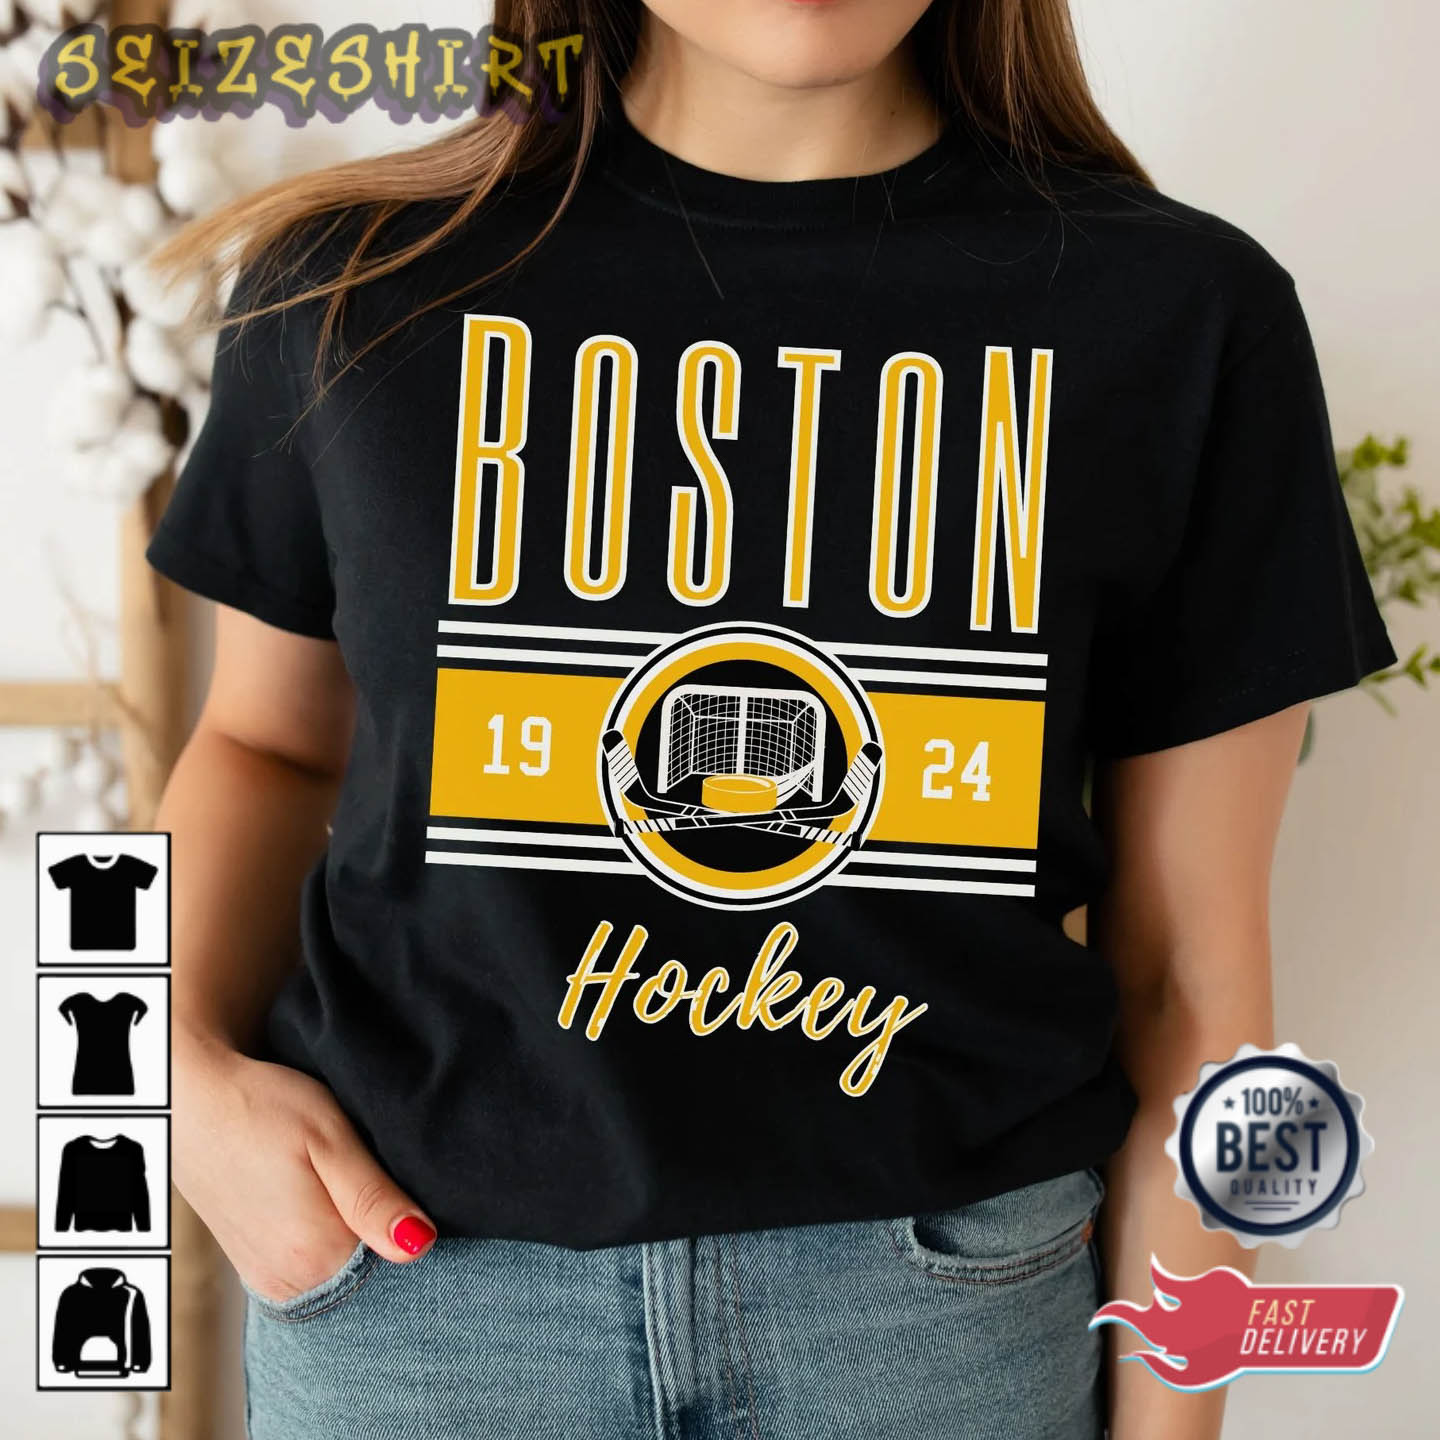 Boston Hockey Retro T-Shirt - Vintage Boston Unisex T-Shirt